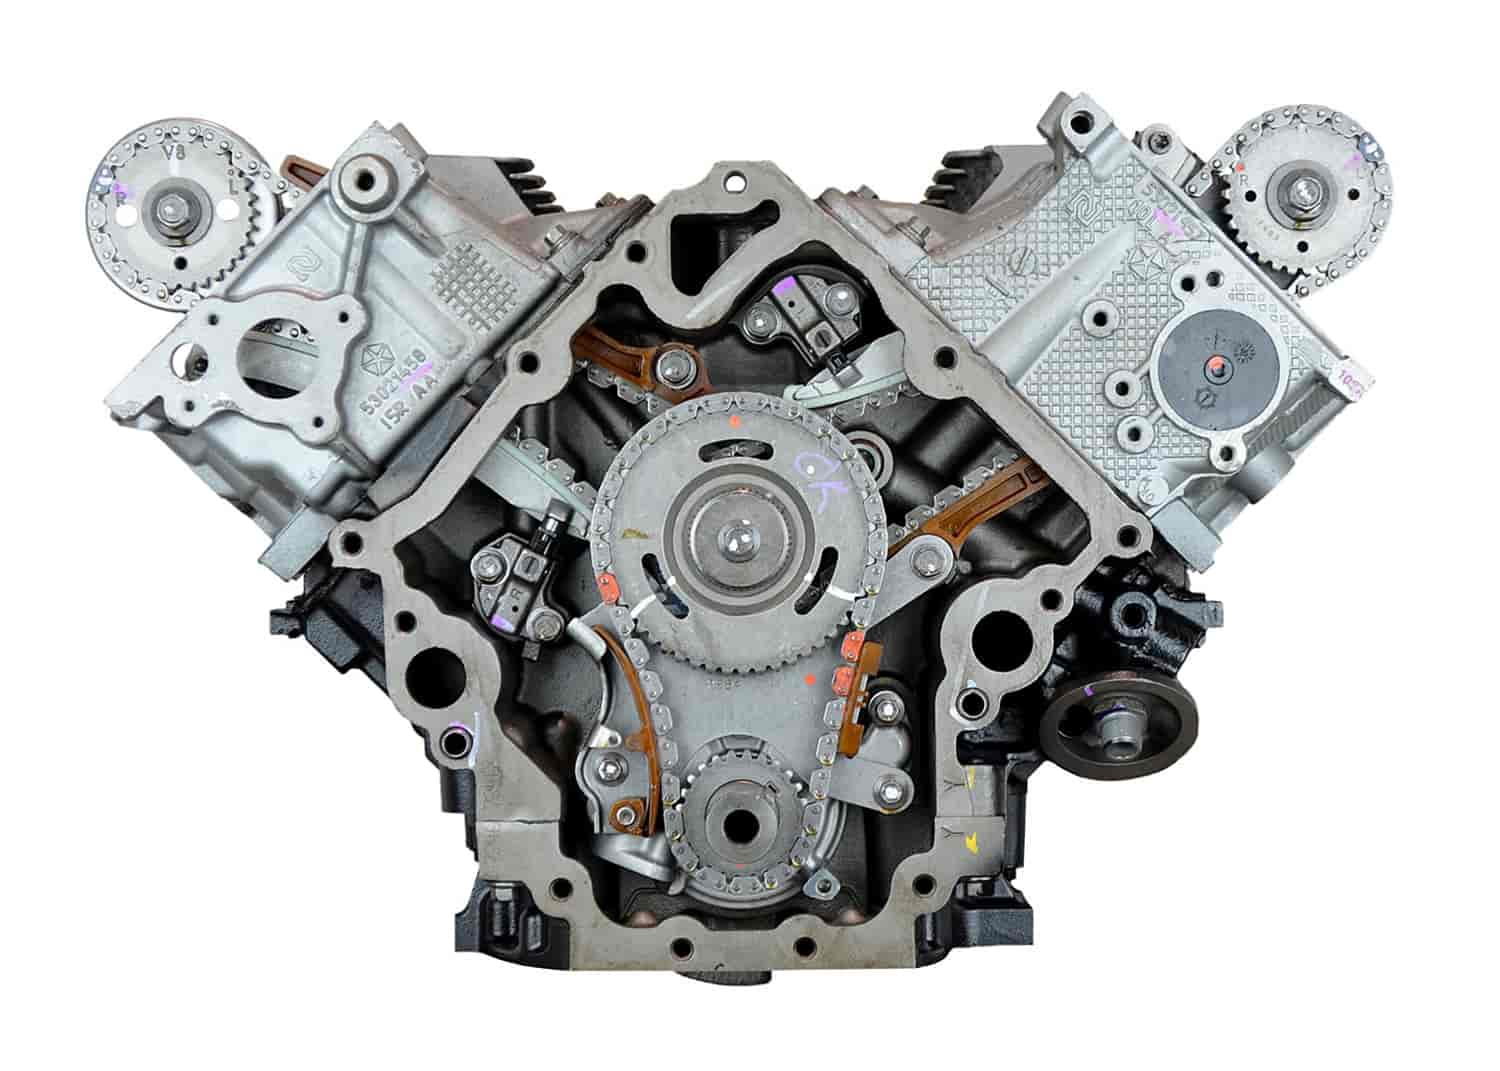 Remanufactured Crate Engine for 2005-2007 Dodge Dakota with 4.7L V8